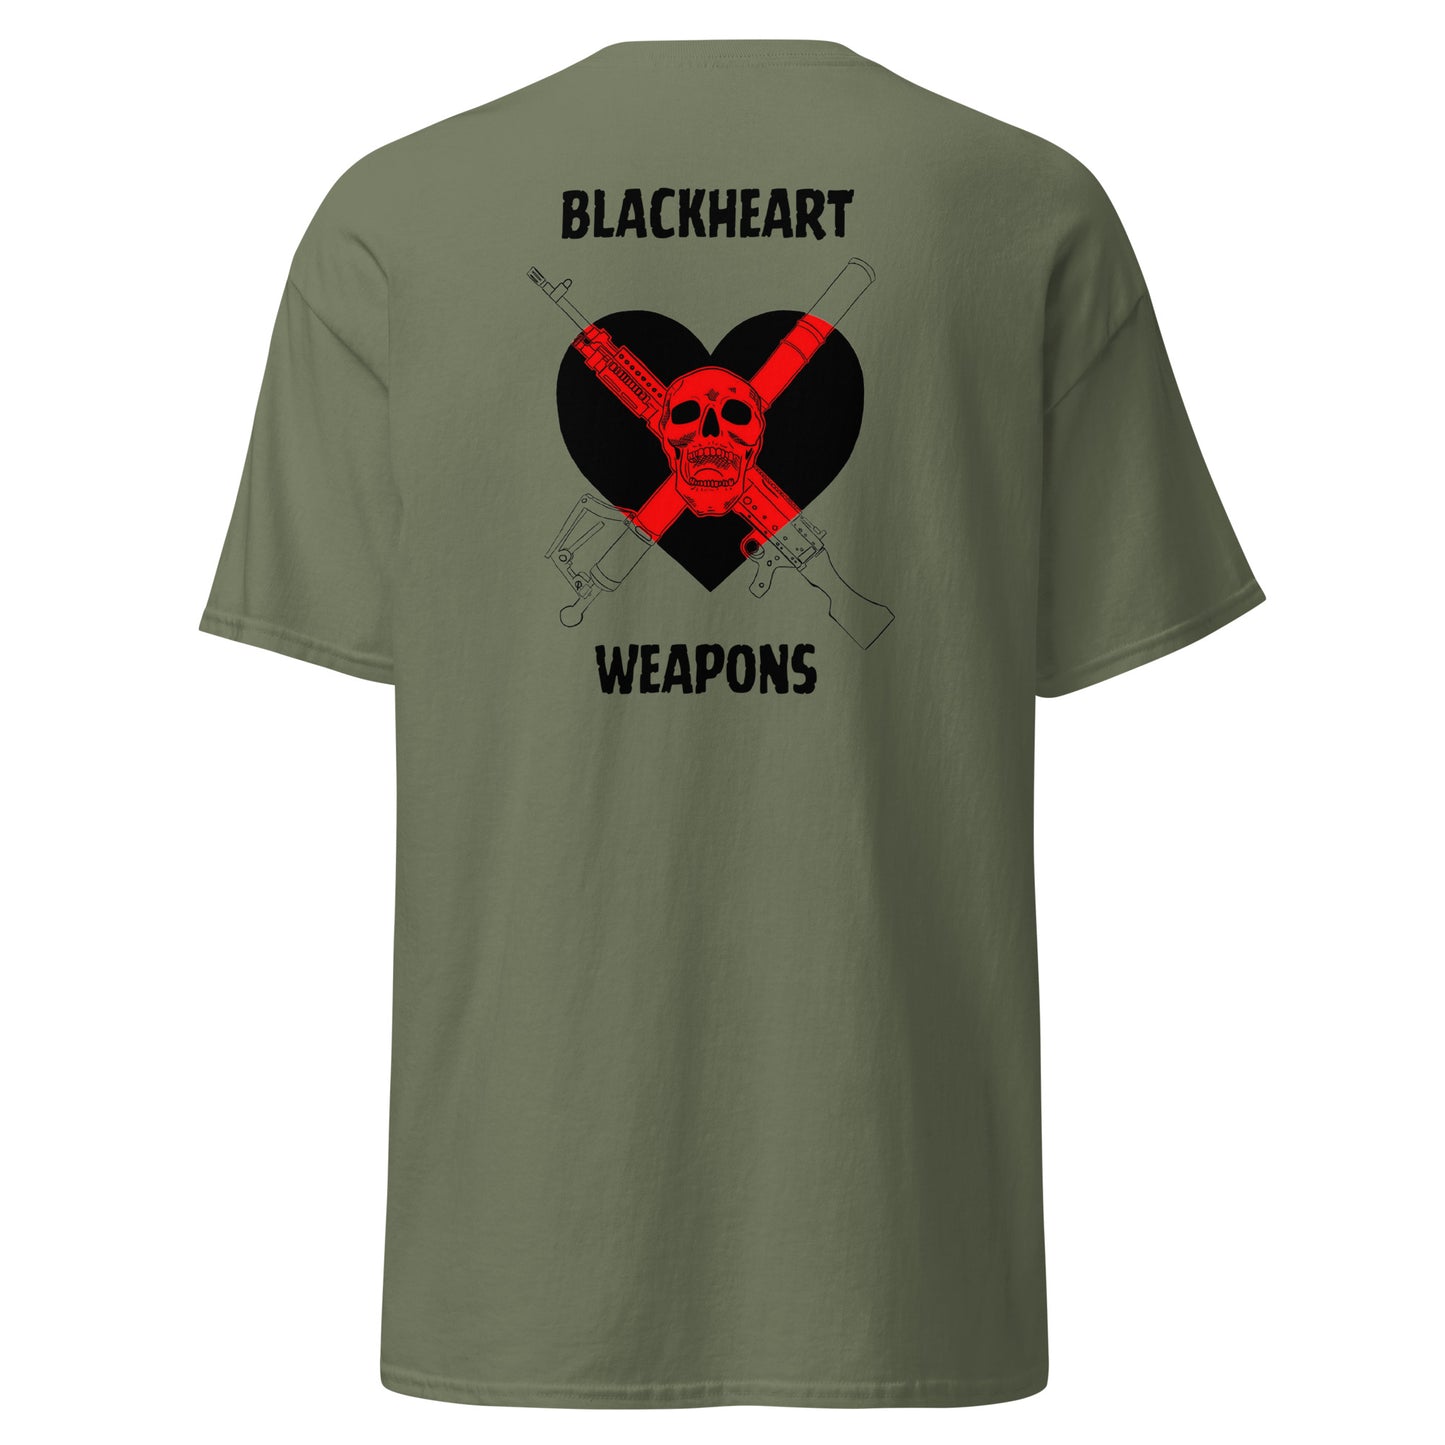 Blackheart 2/5 Weapons Plt Tee